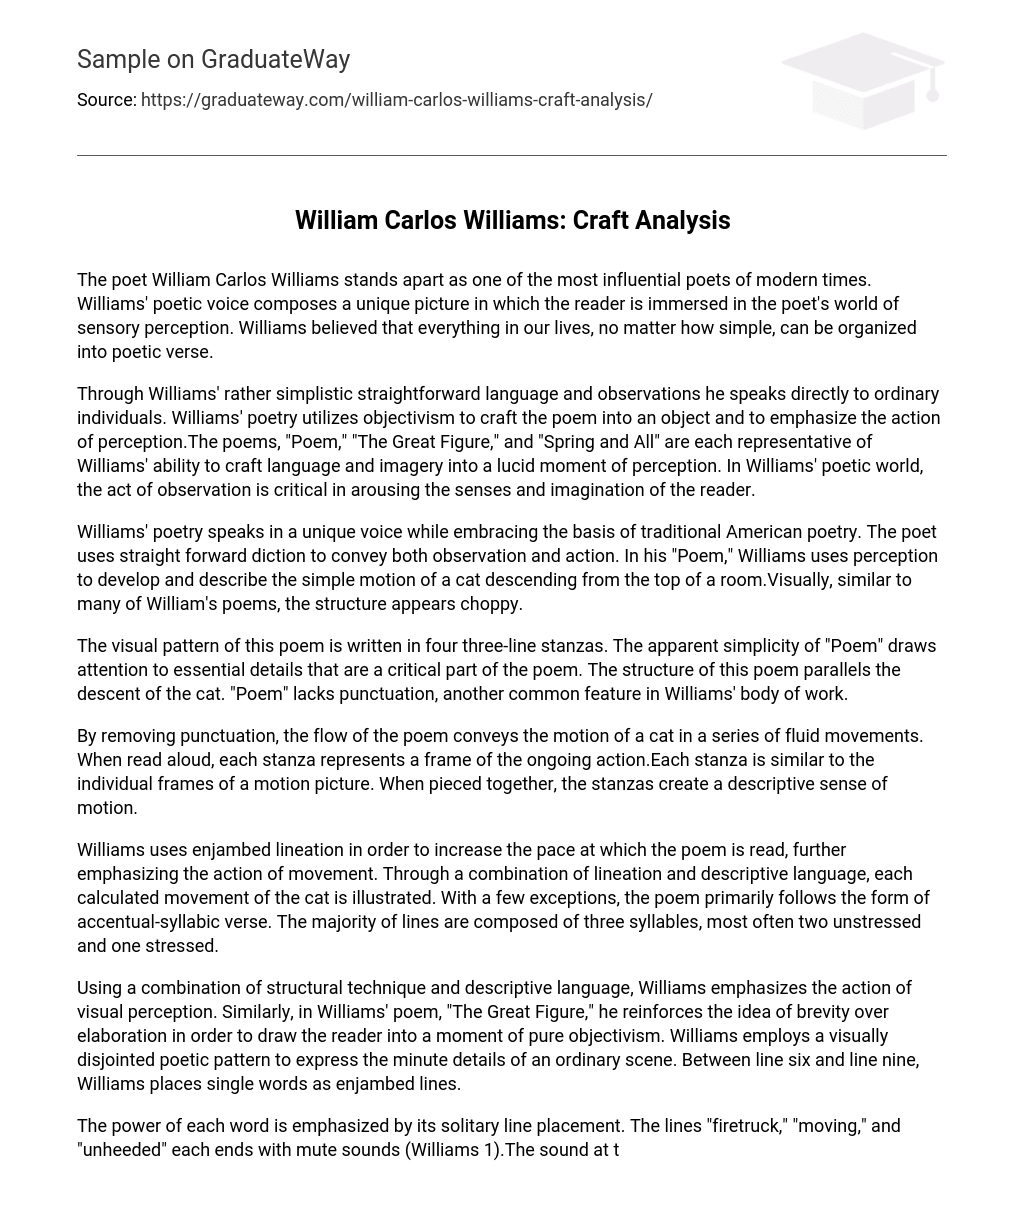 William Carlos Williams: Craft Analysis